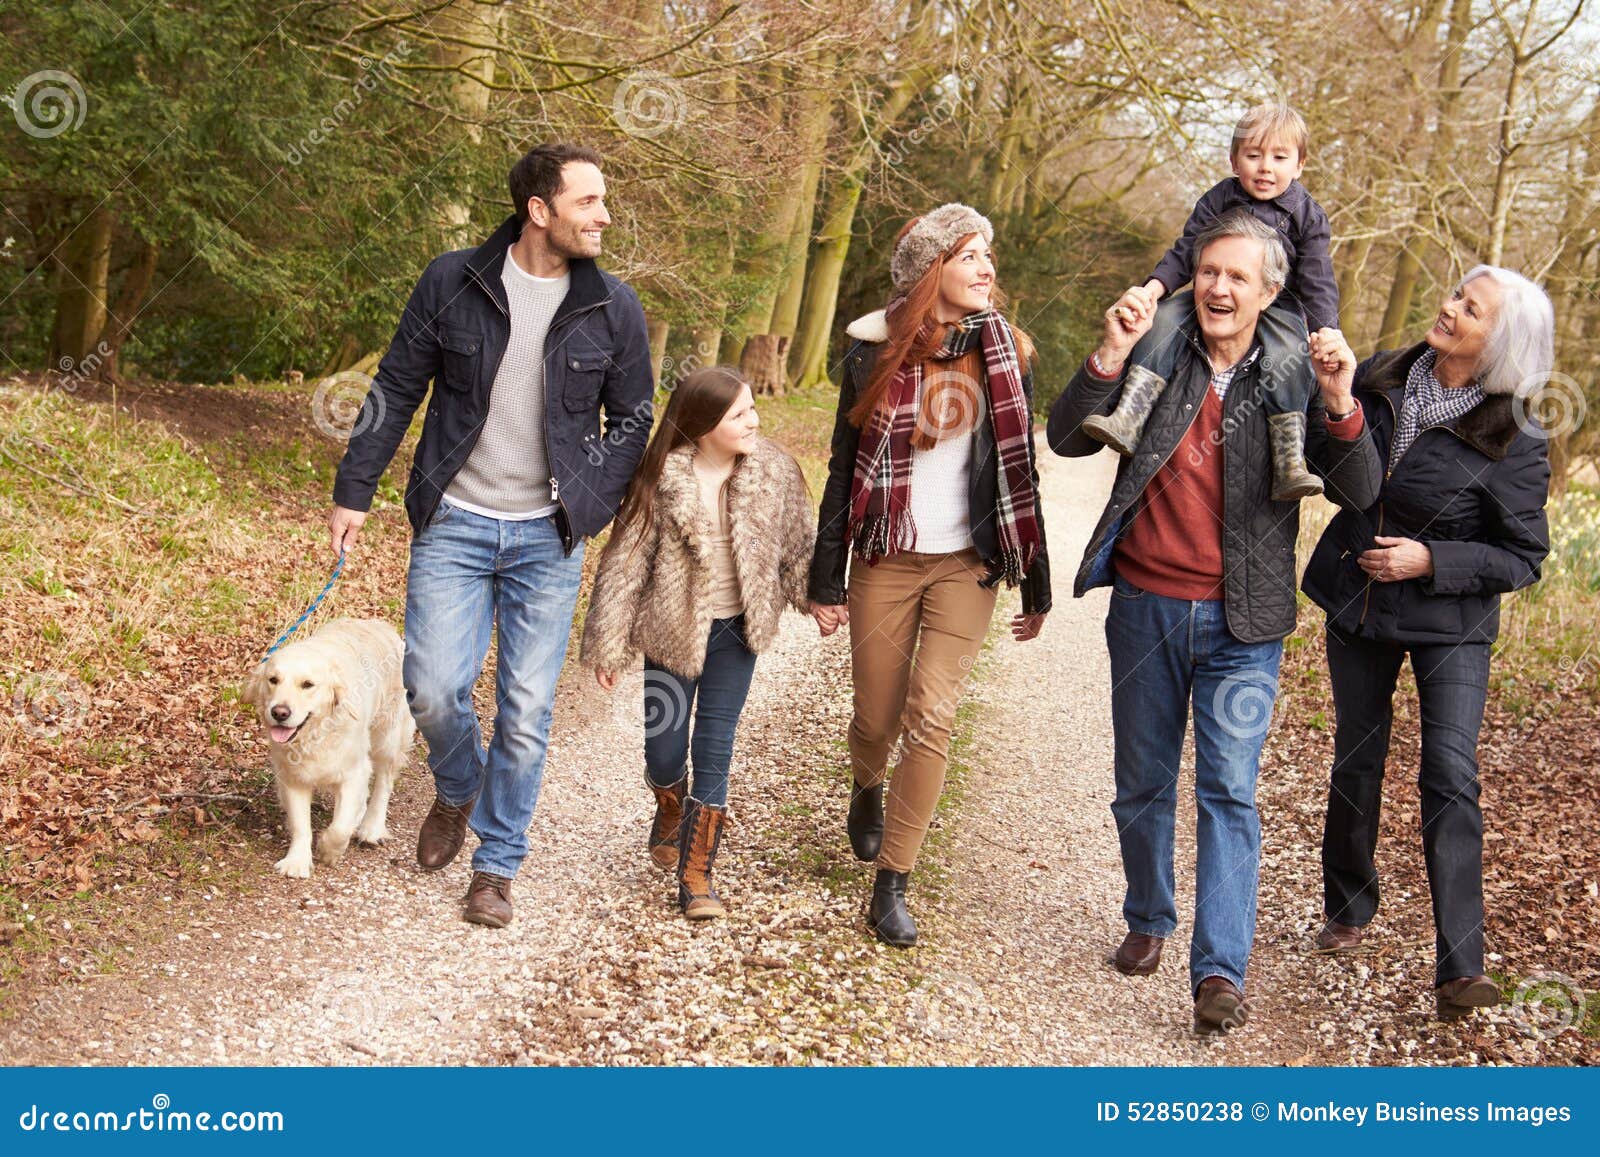 multi generation family on countryside walk